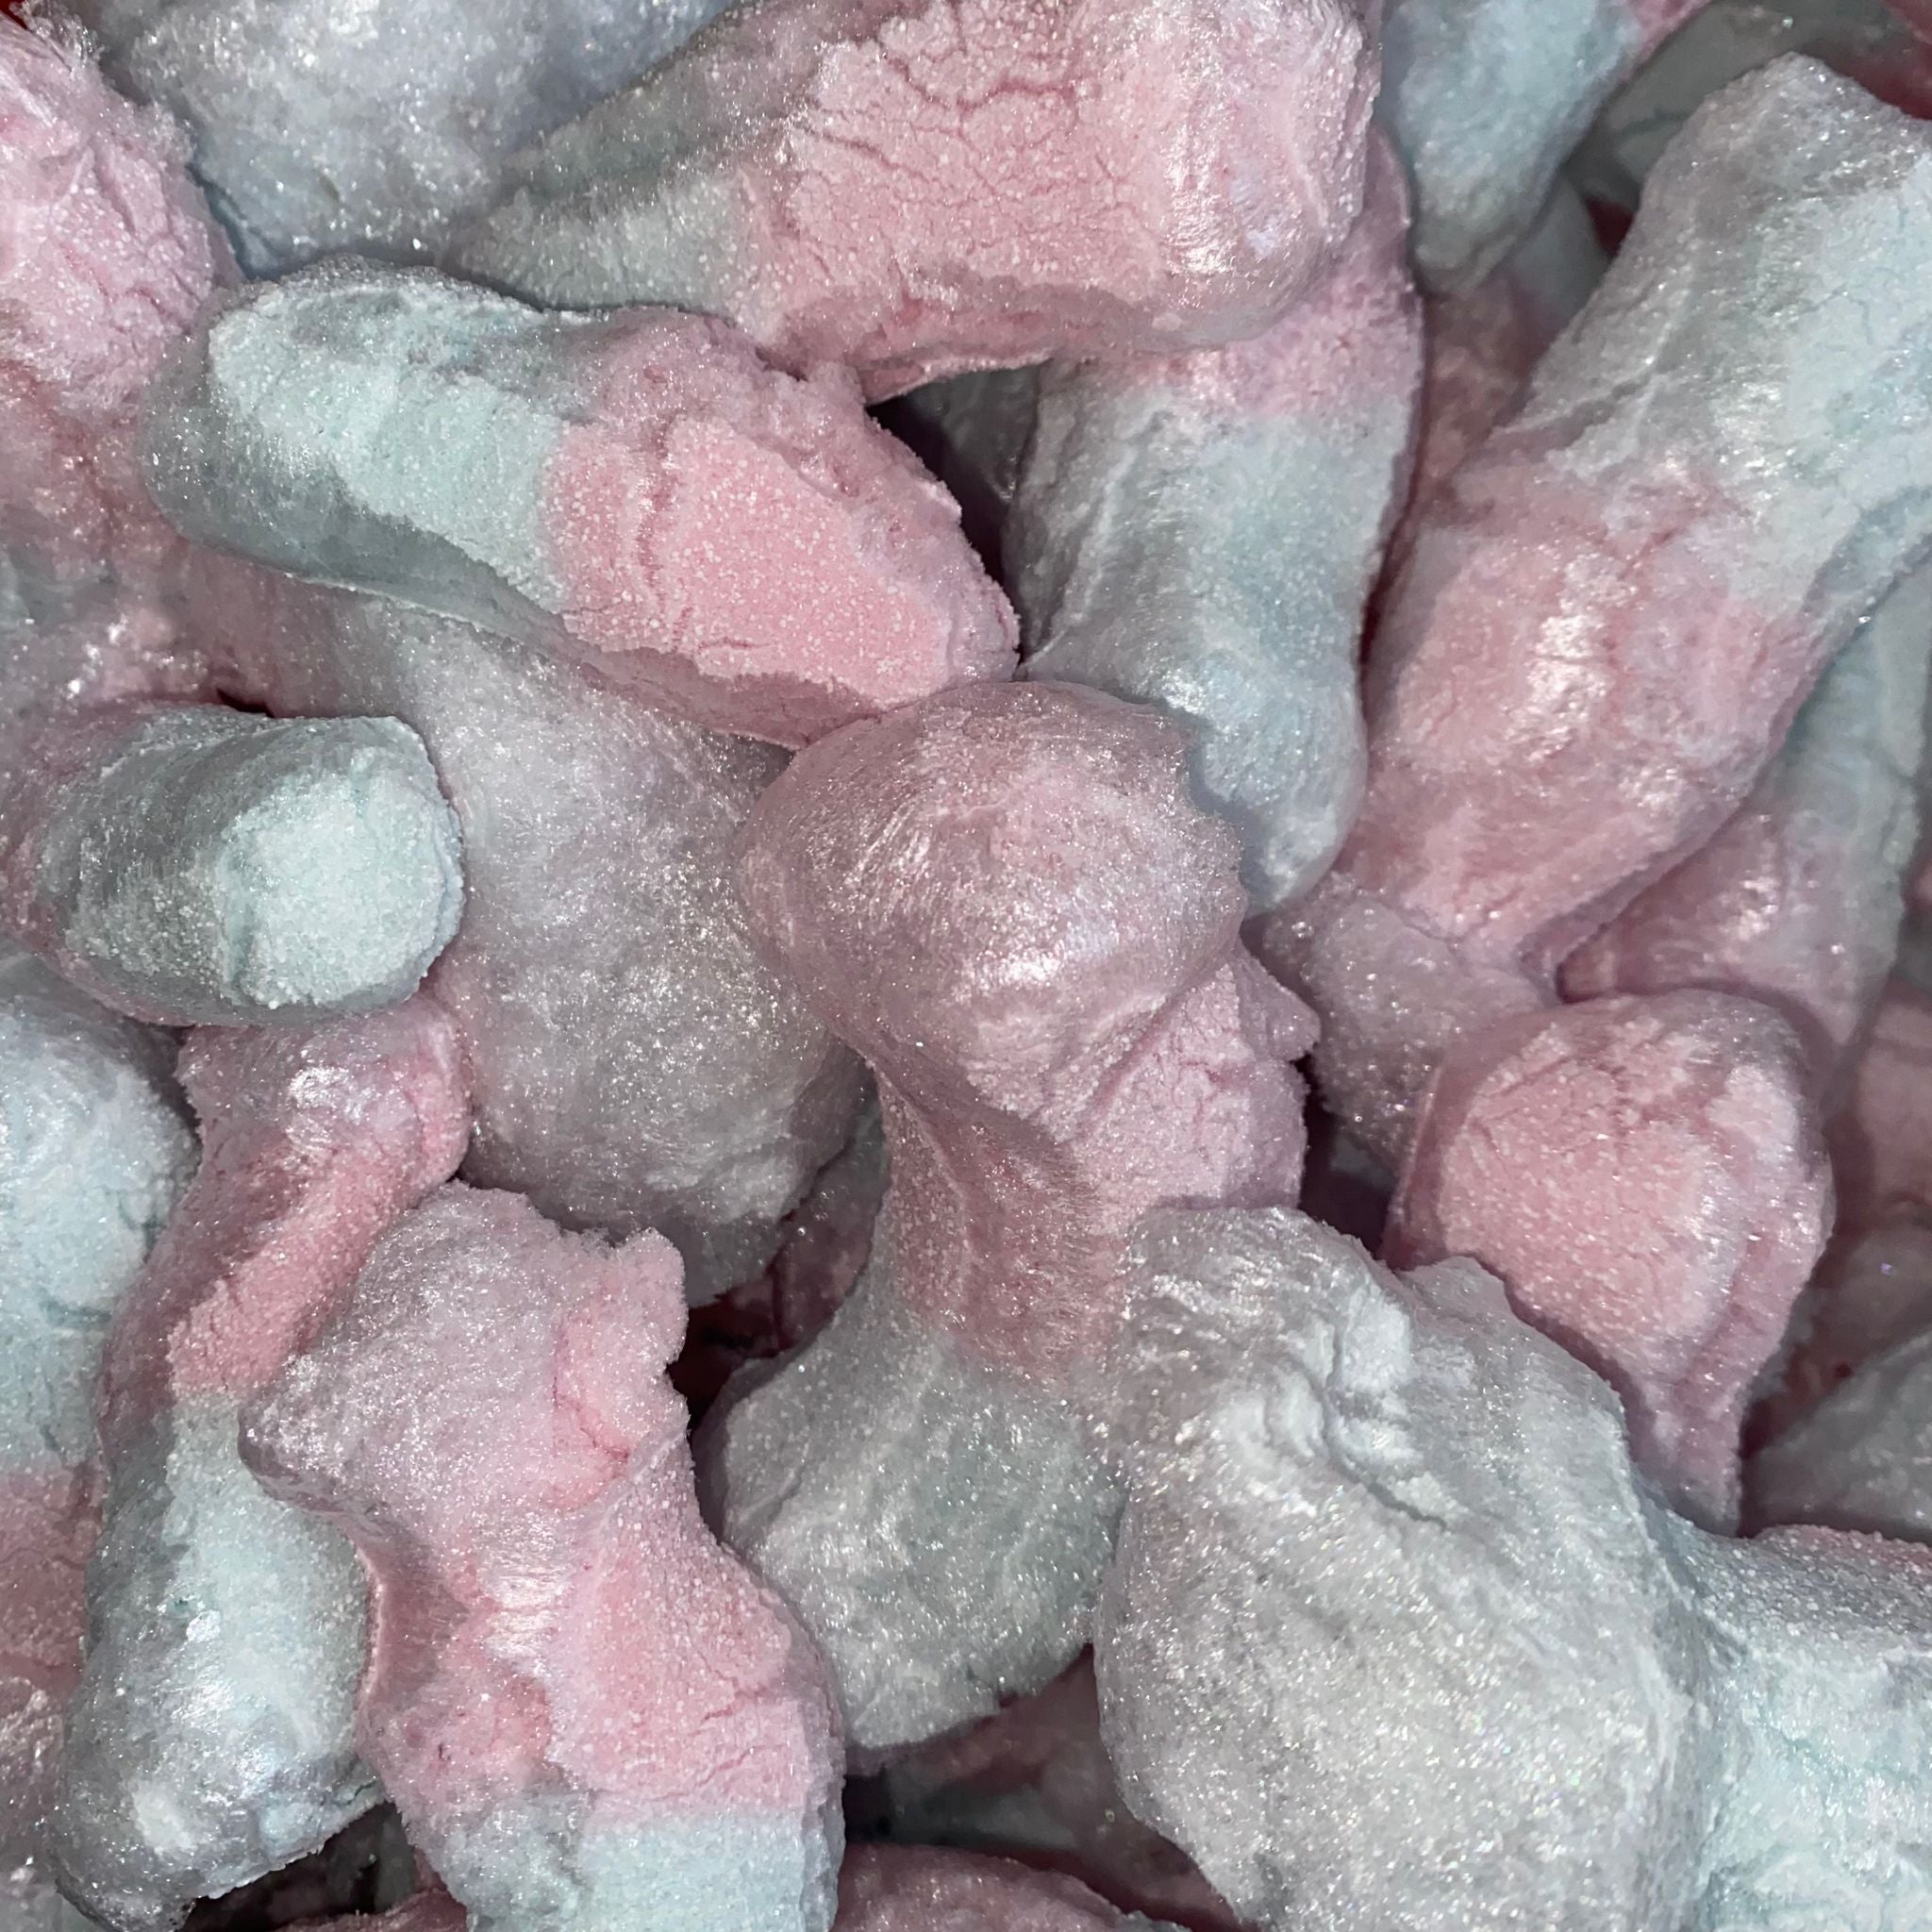 Bubblegum Bottles - Freeze Dried Sweets